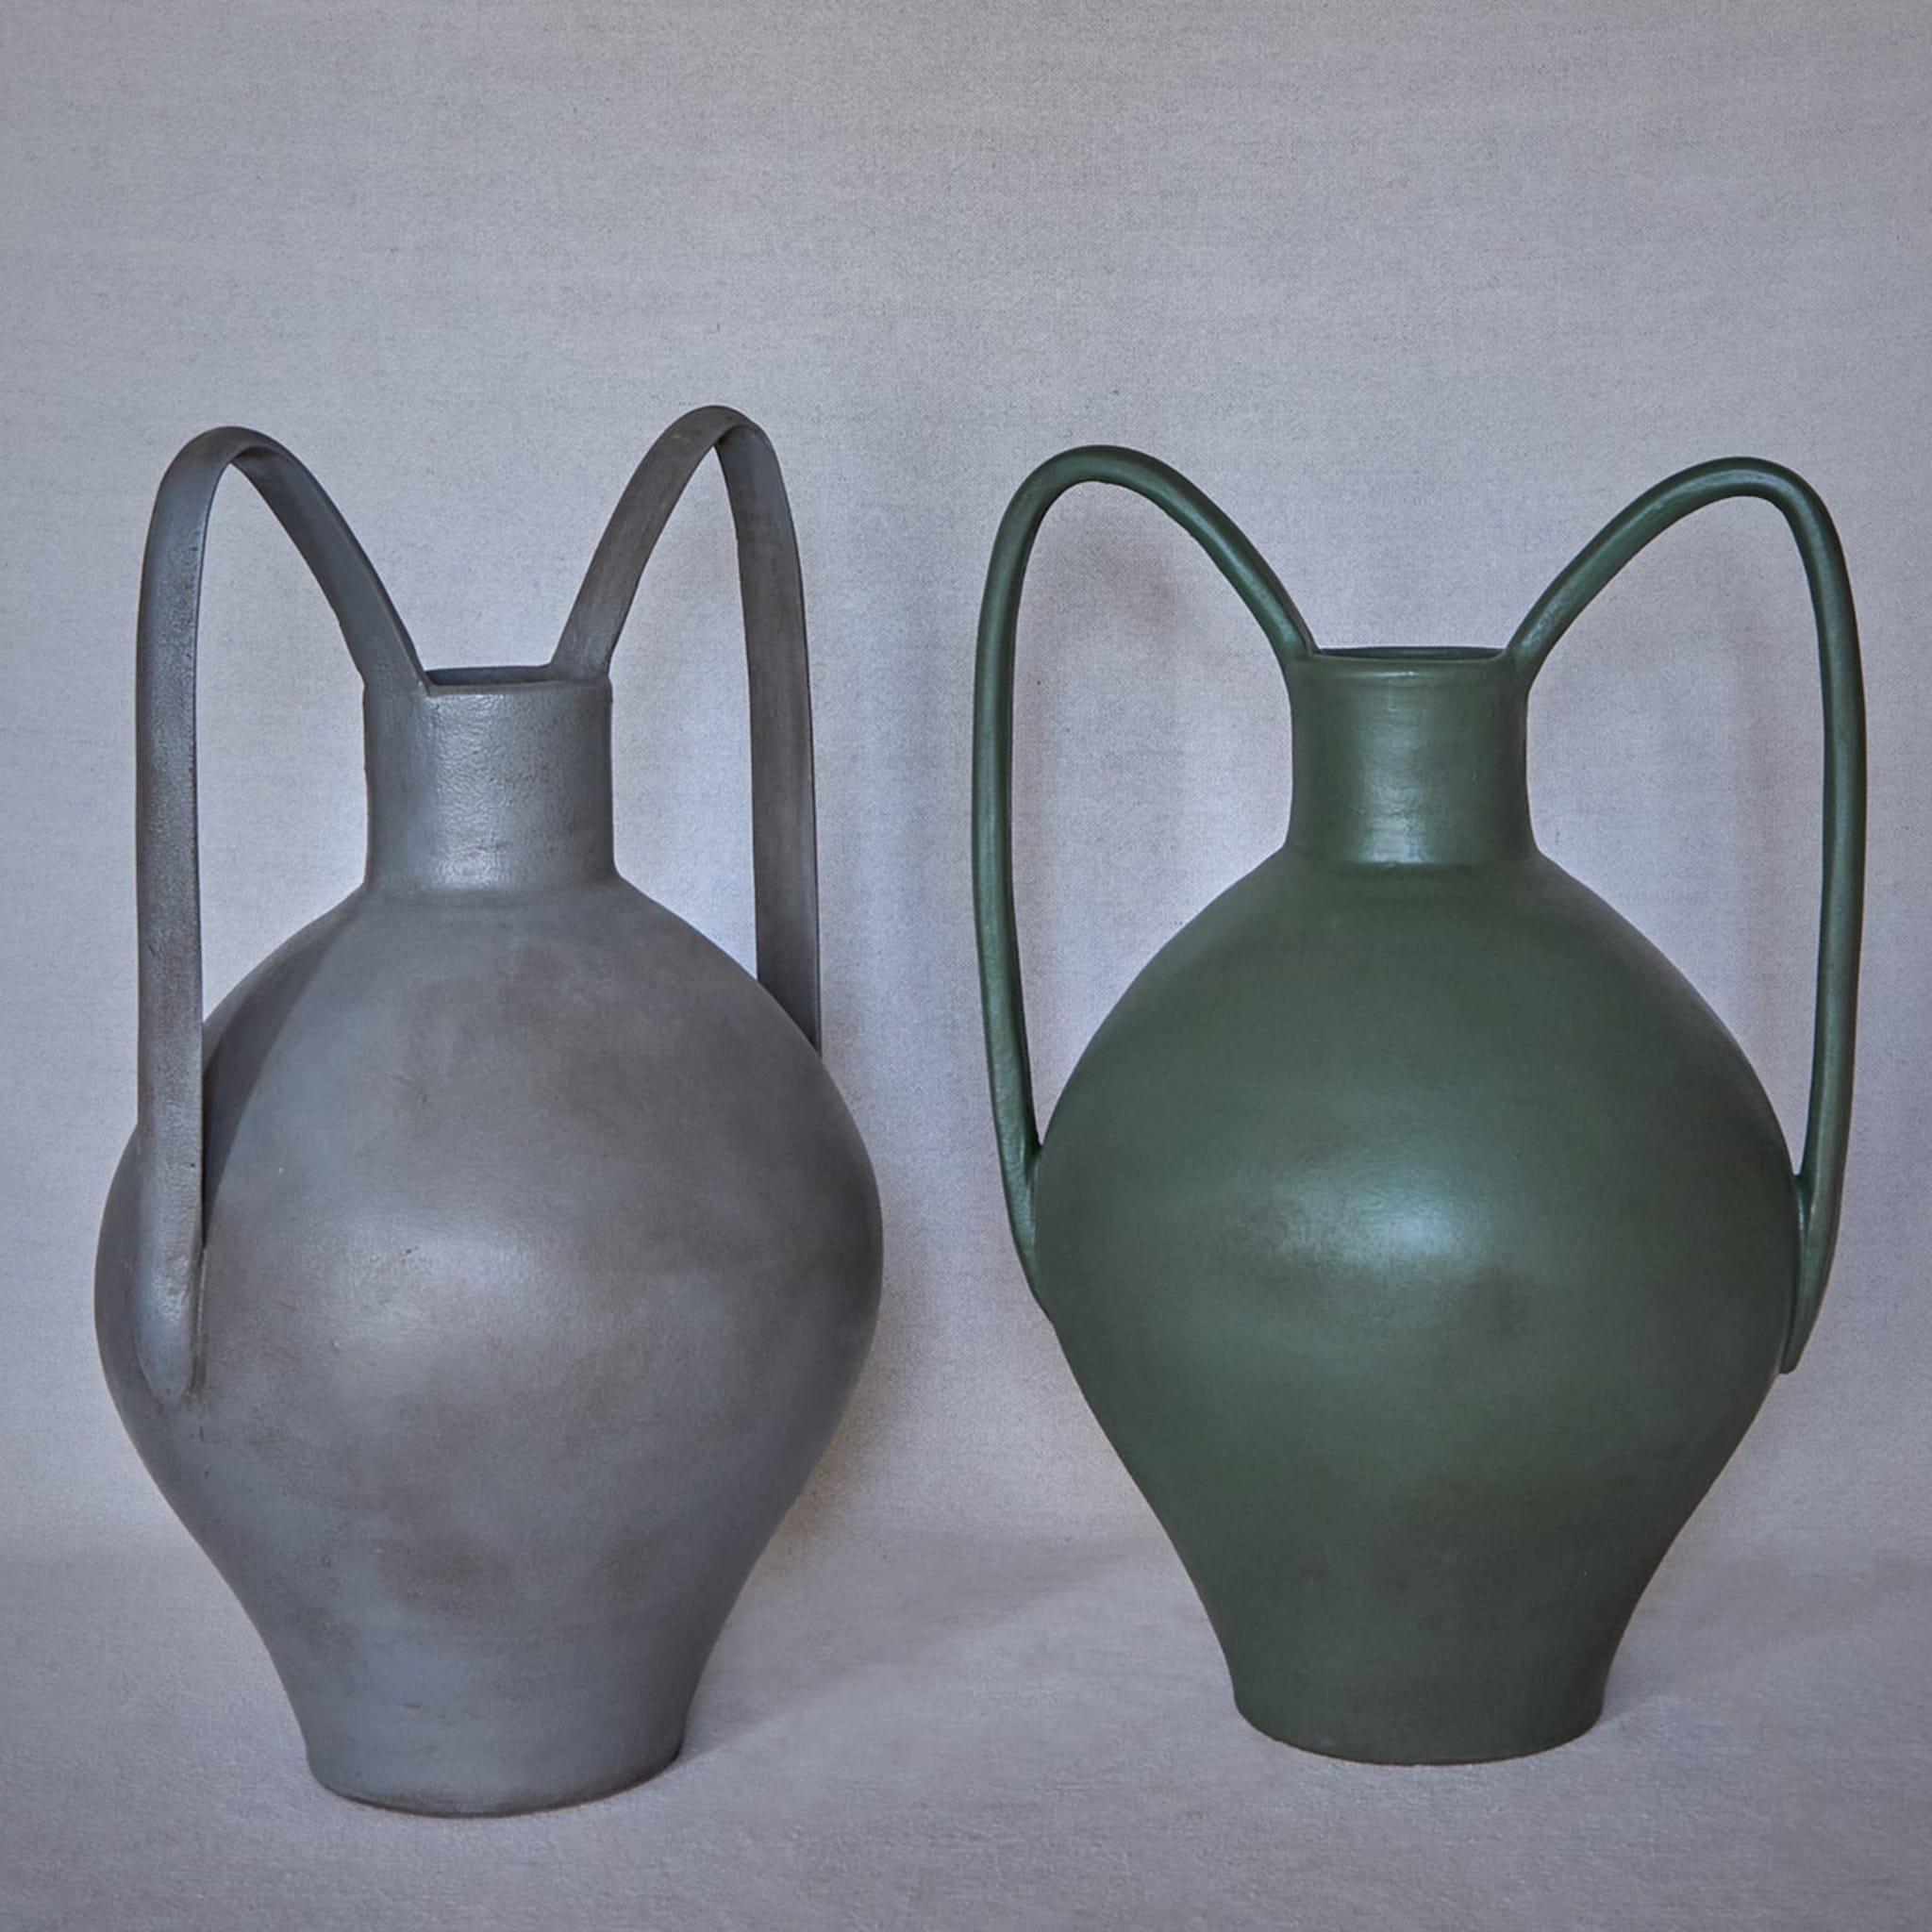 Anfora 2 Green Vase - Alternative view 1